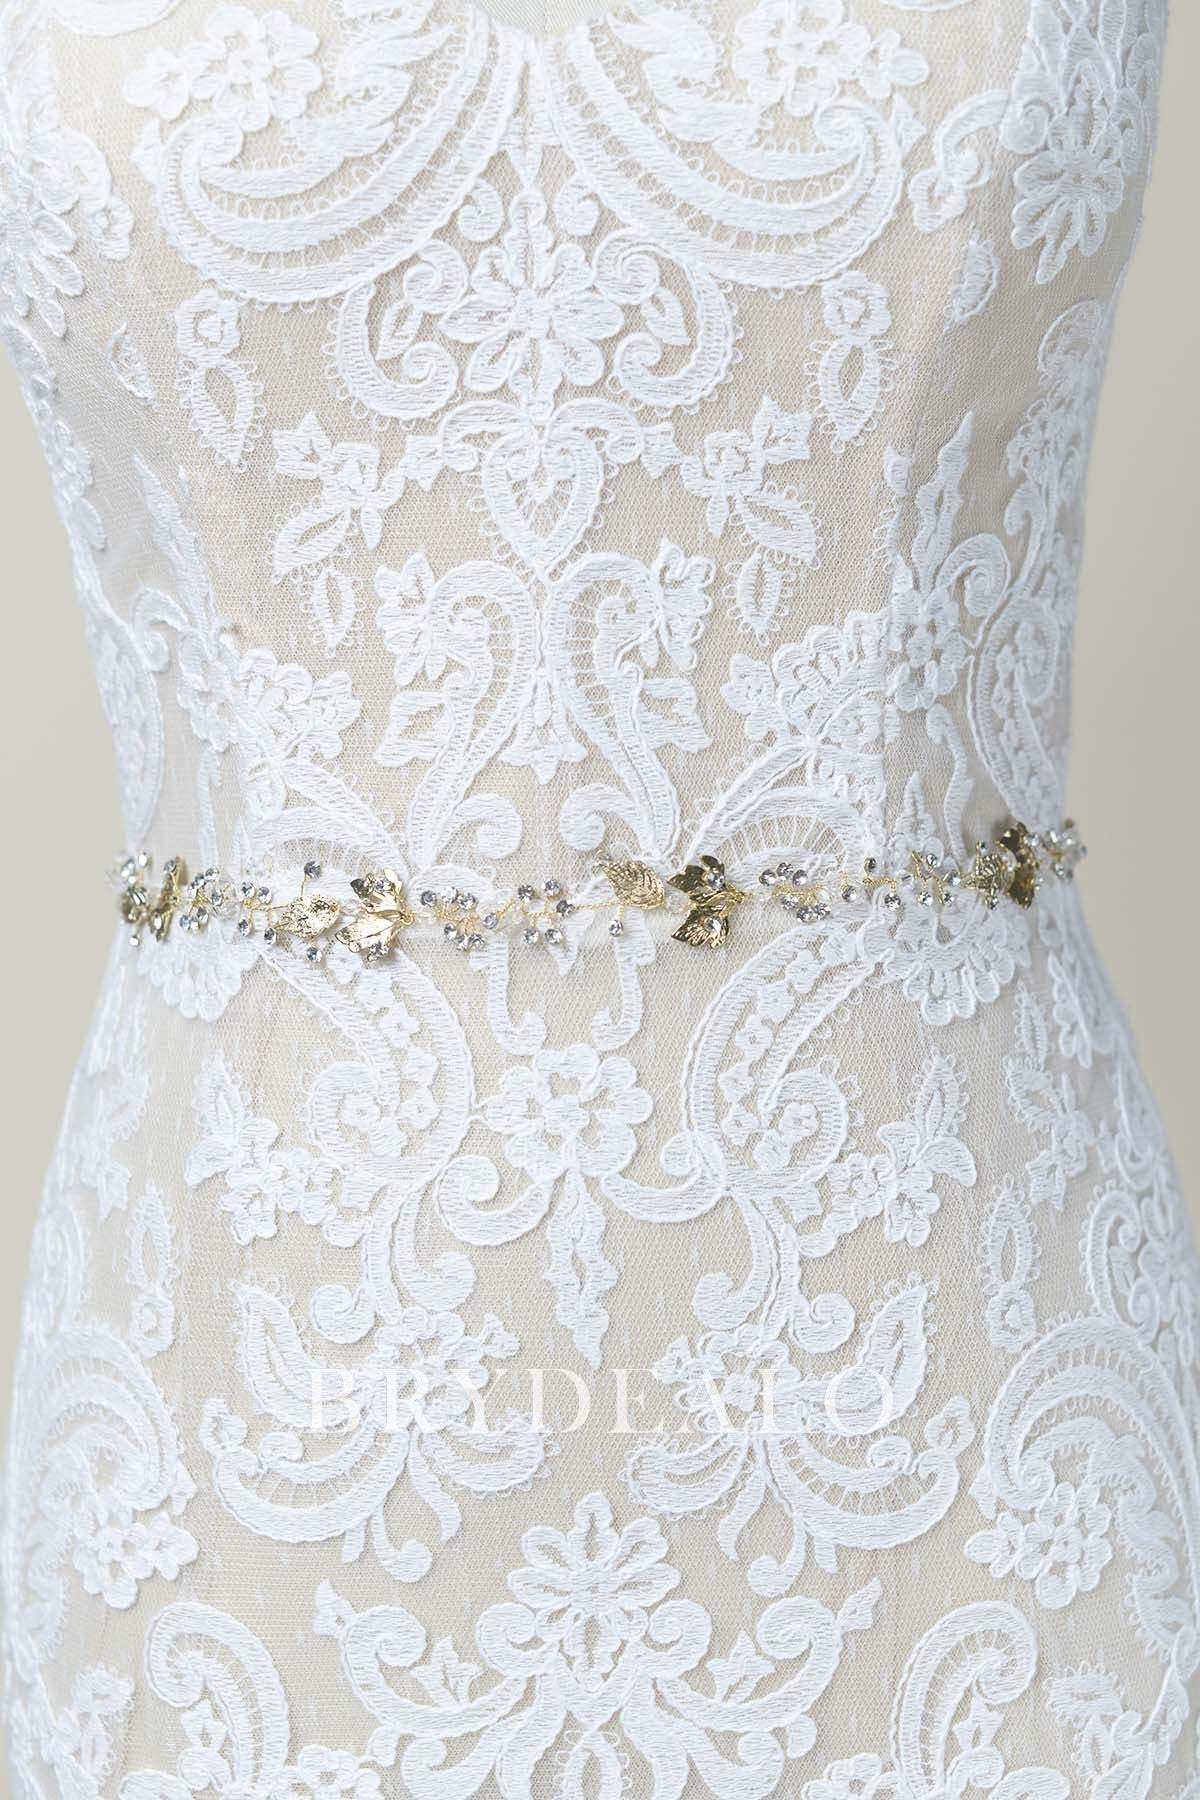 Exquisite Gold Silver Crystal Bridal Sash Ivory Satin Online